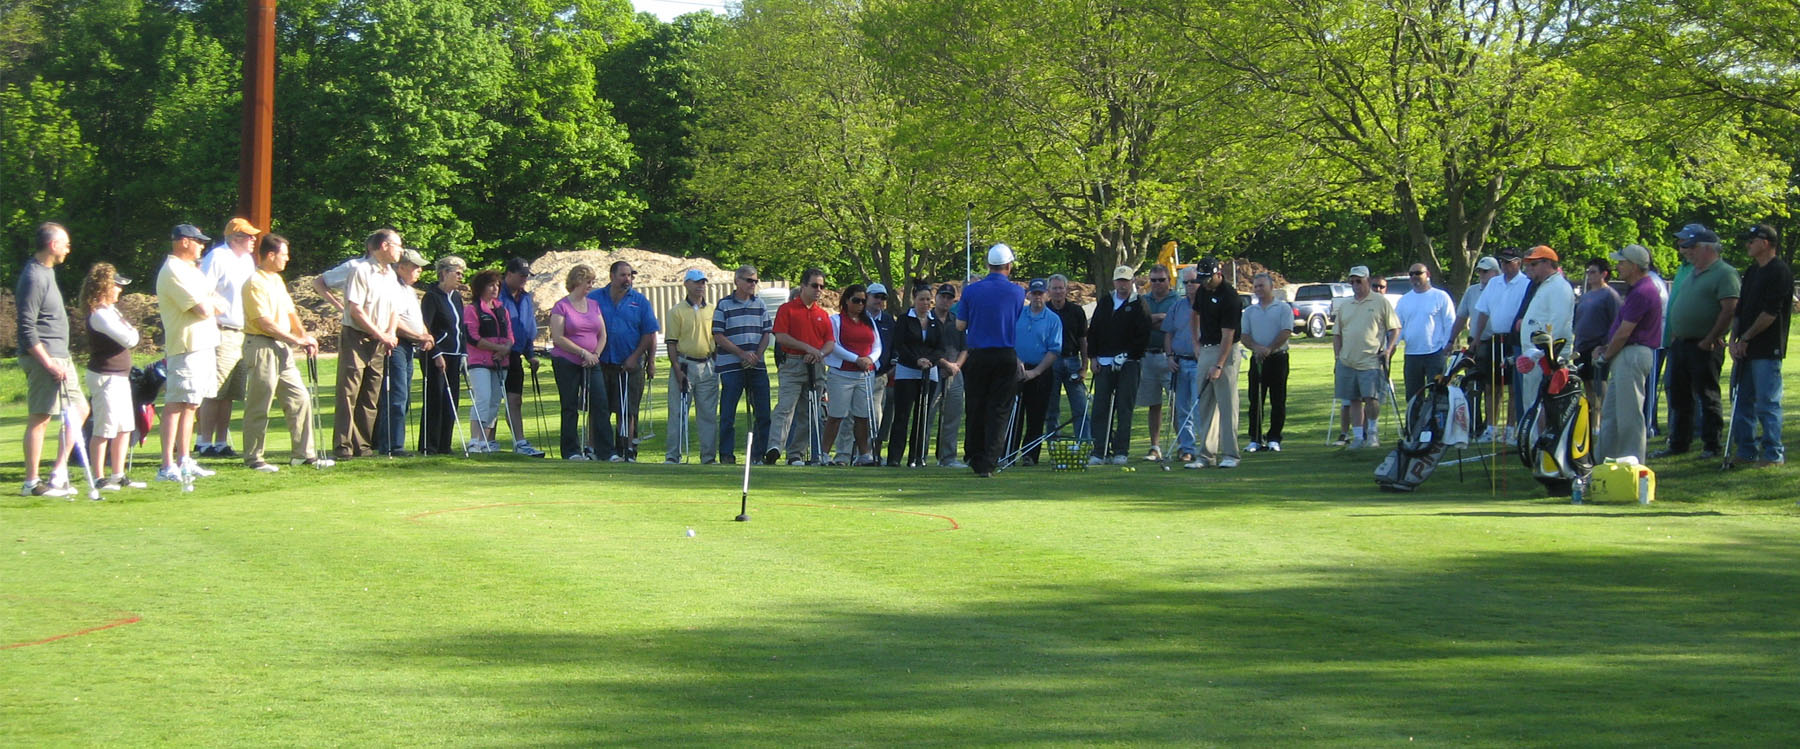 Players and spectators standing around golf player